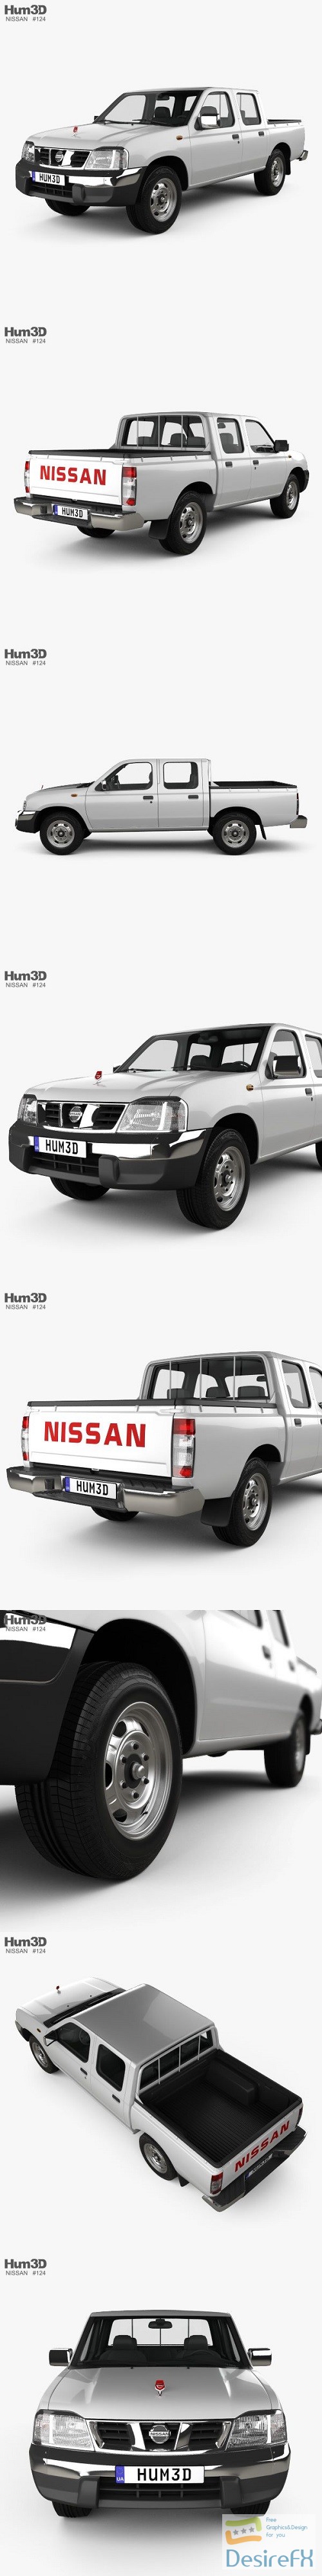 Nissan Ddsen 2015 3D Model